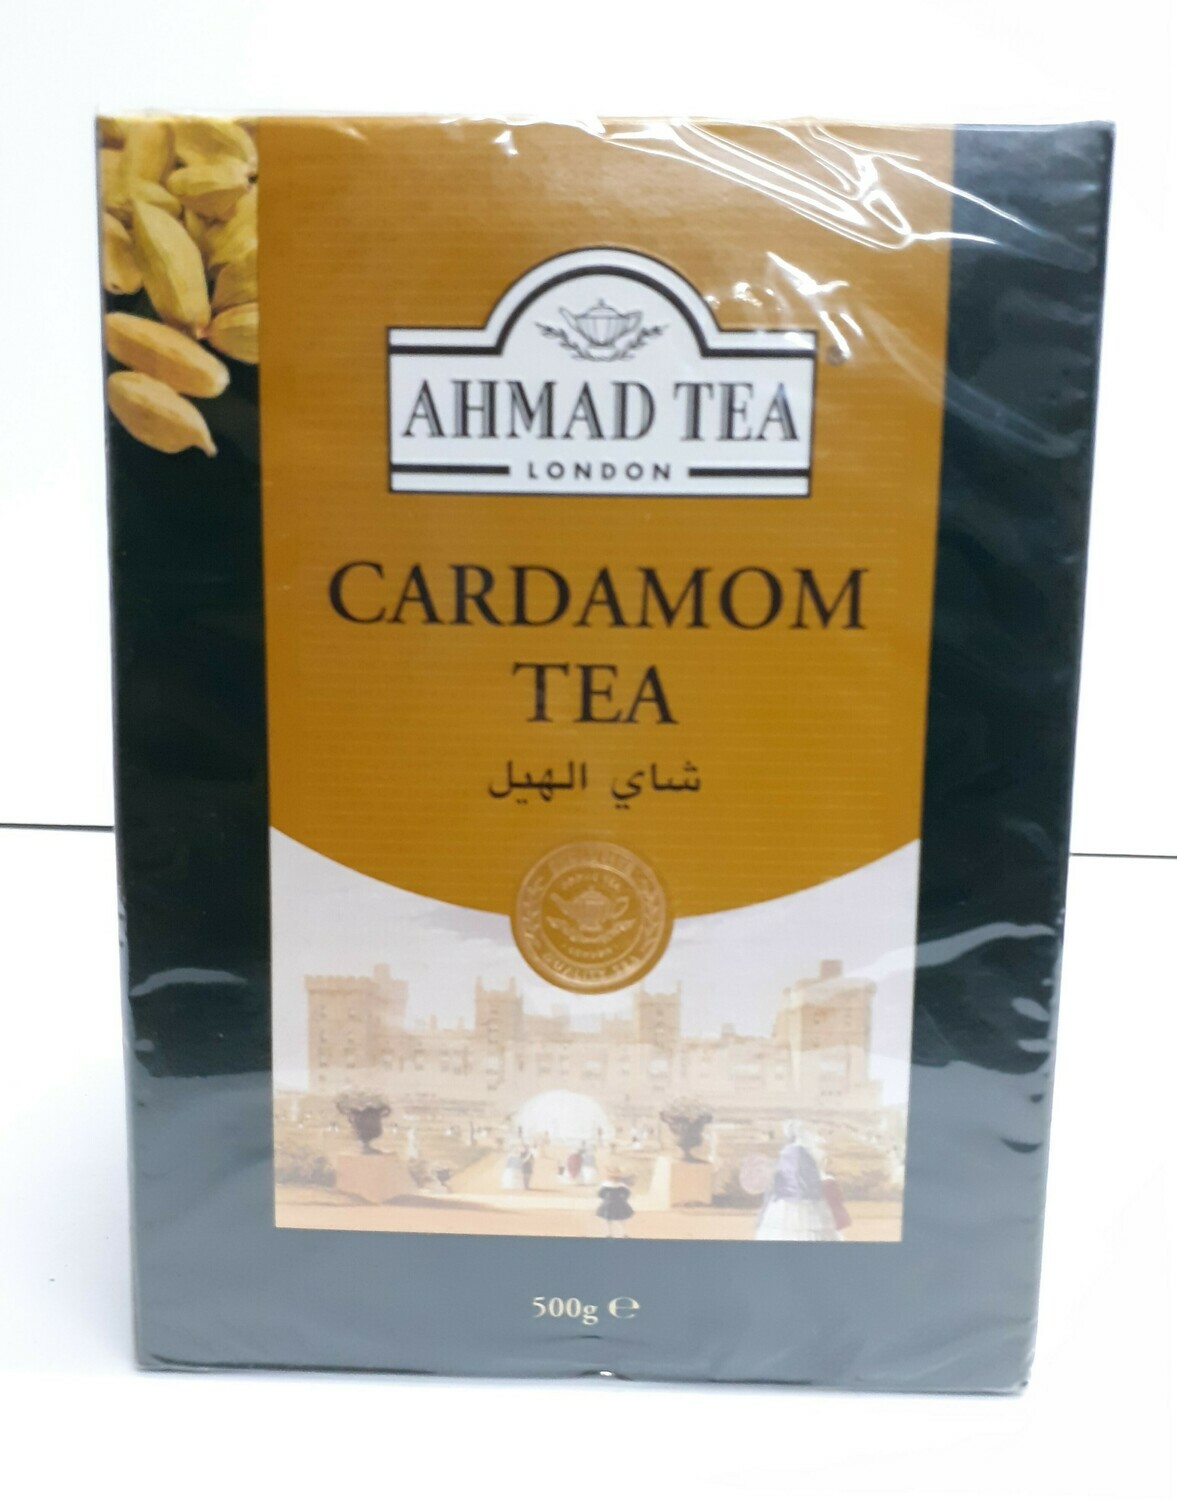 Cardamom Tea AHMAD TEA LONDON 500 g